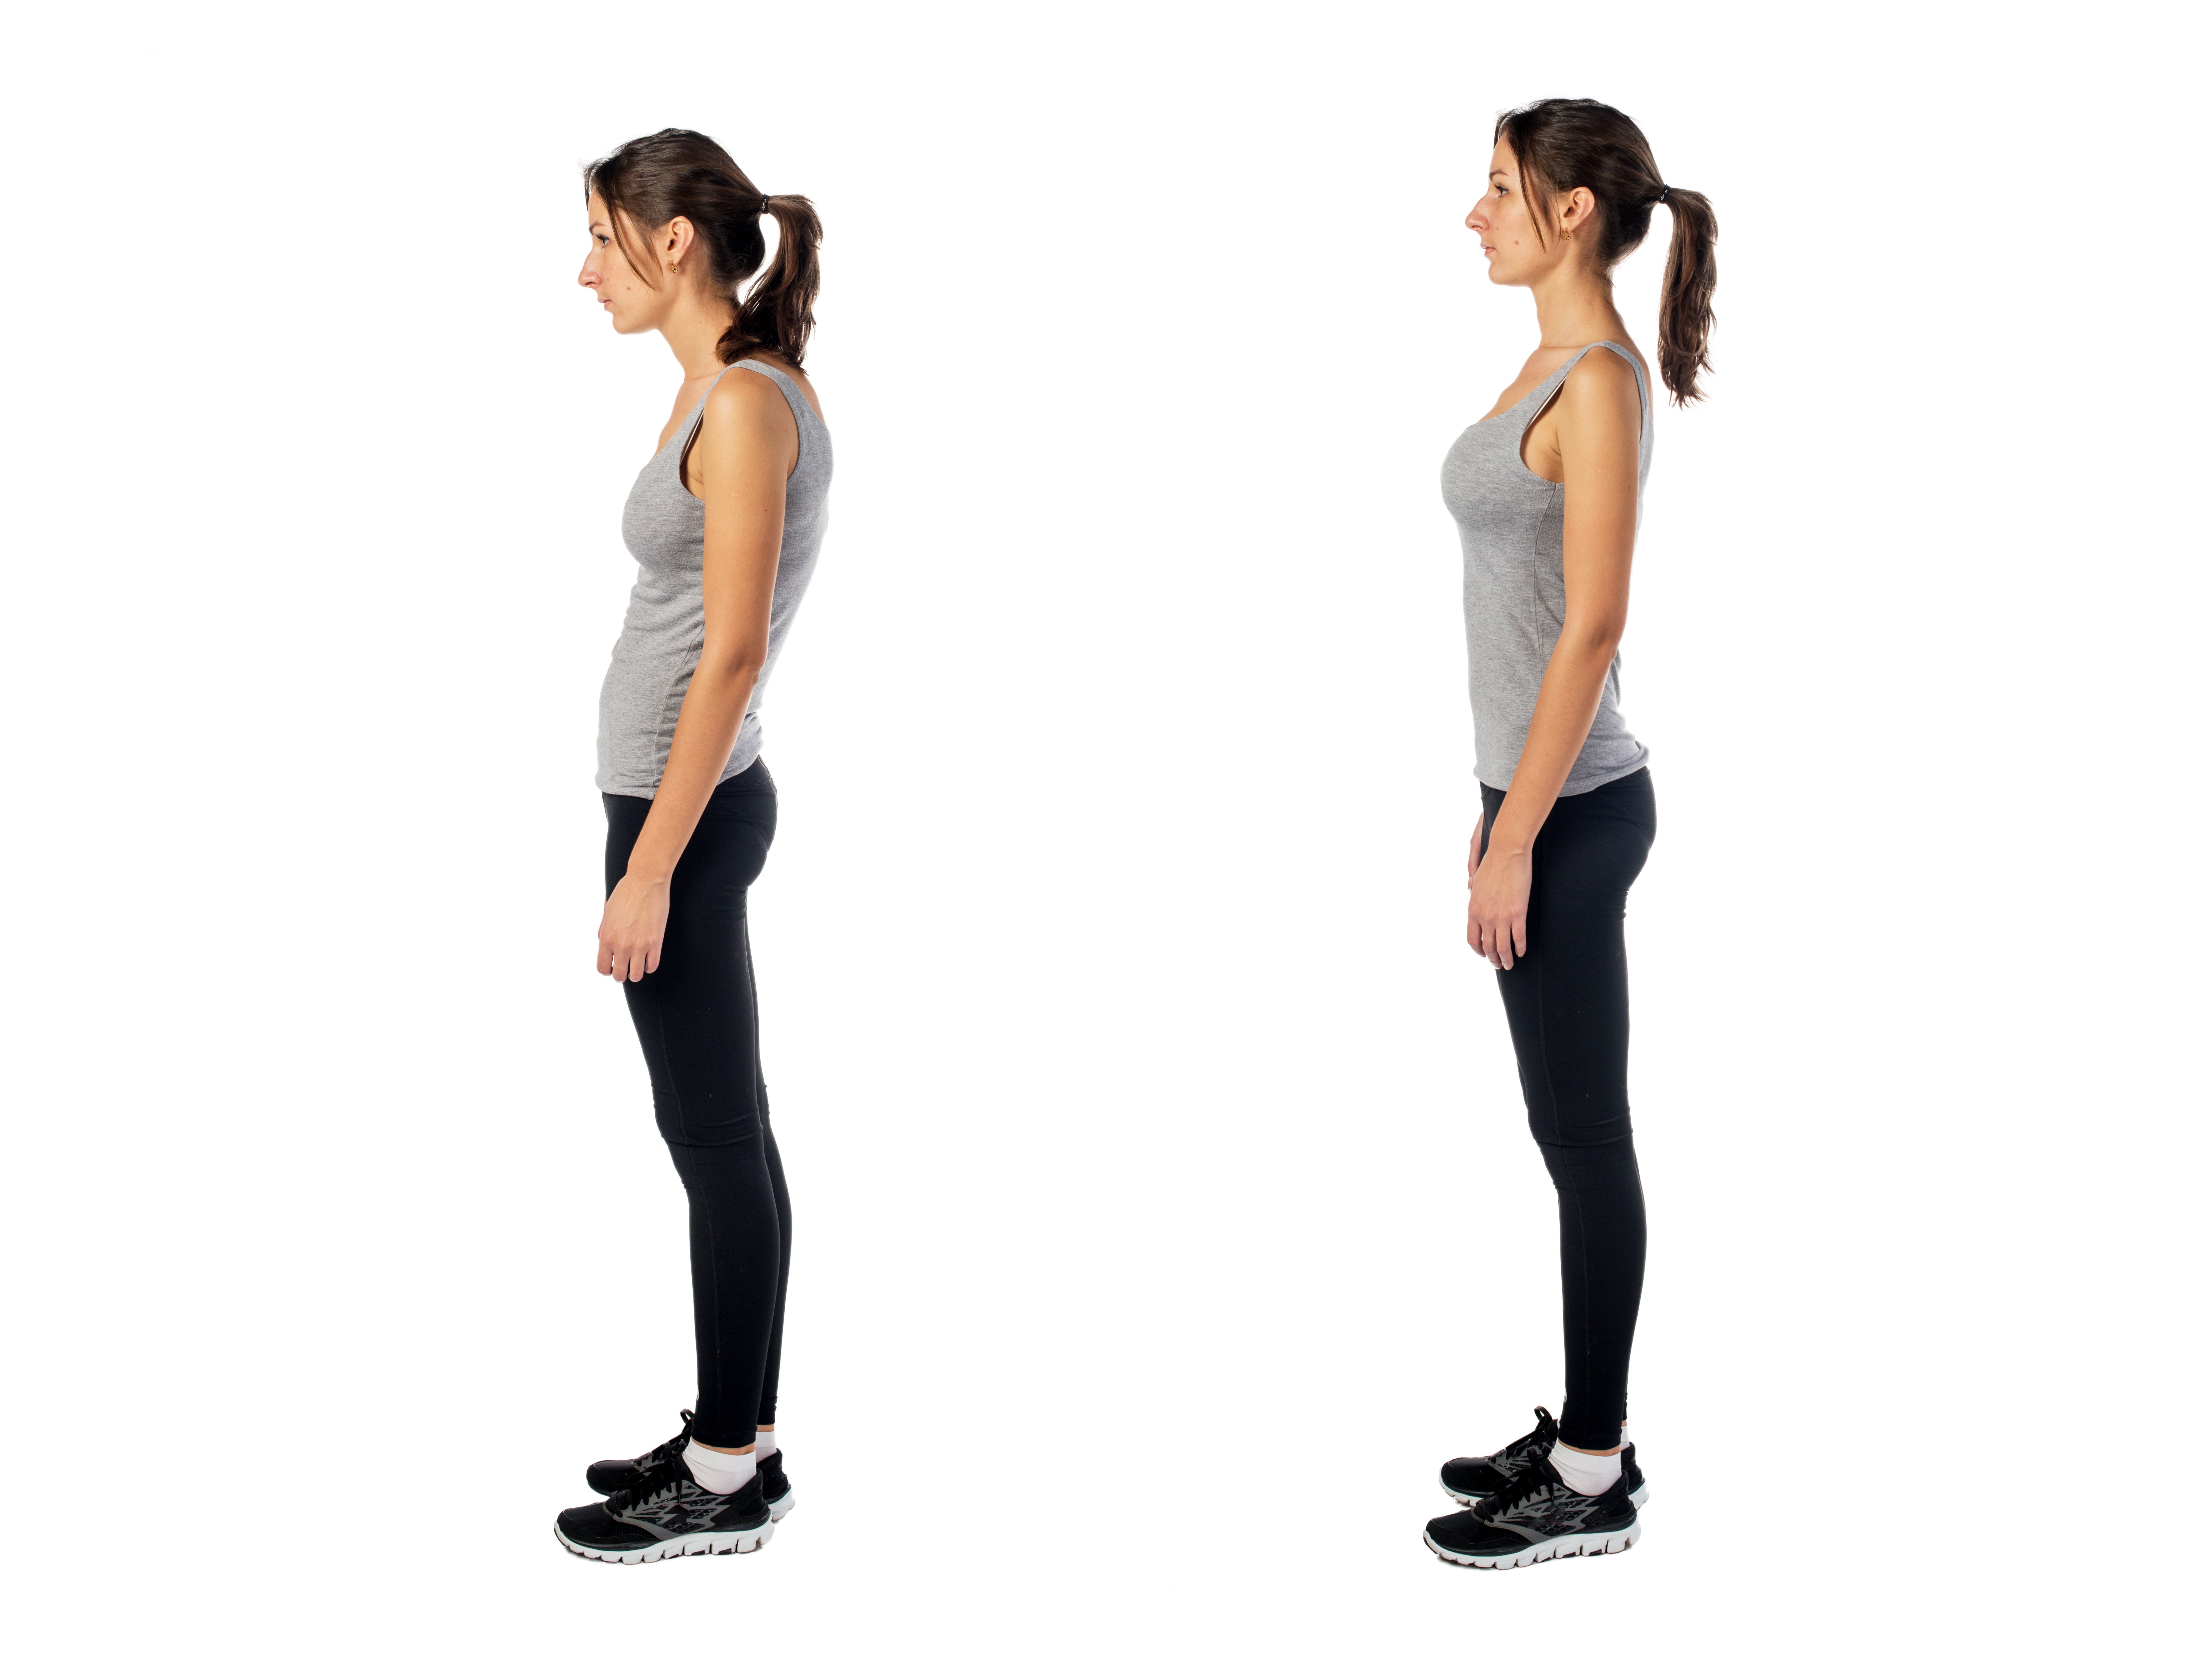 A woman demonstrating good posture. | Source: Shutterstock